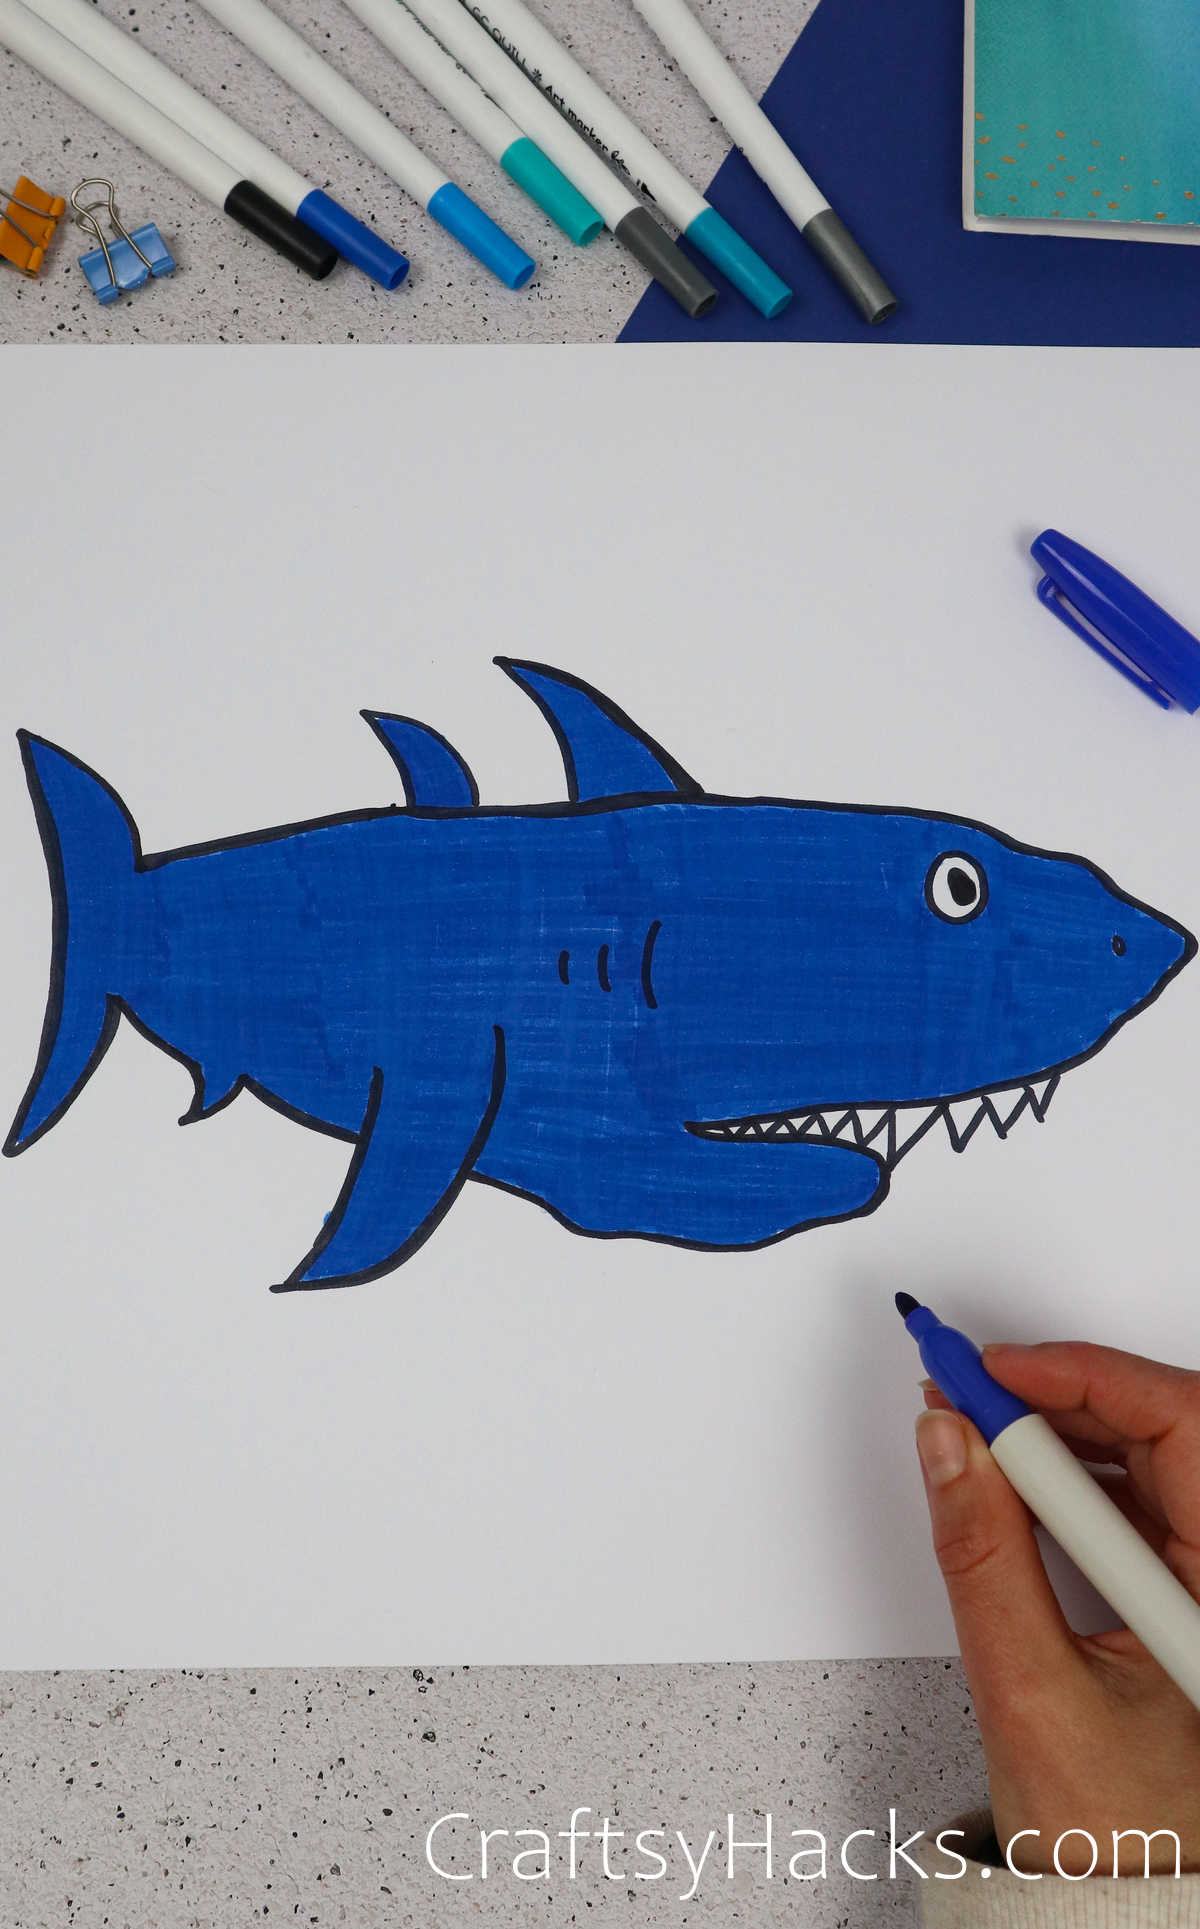 shark doodle